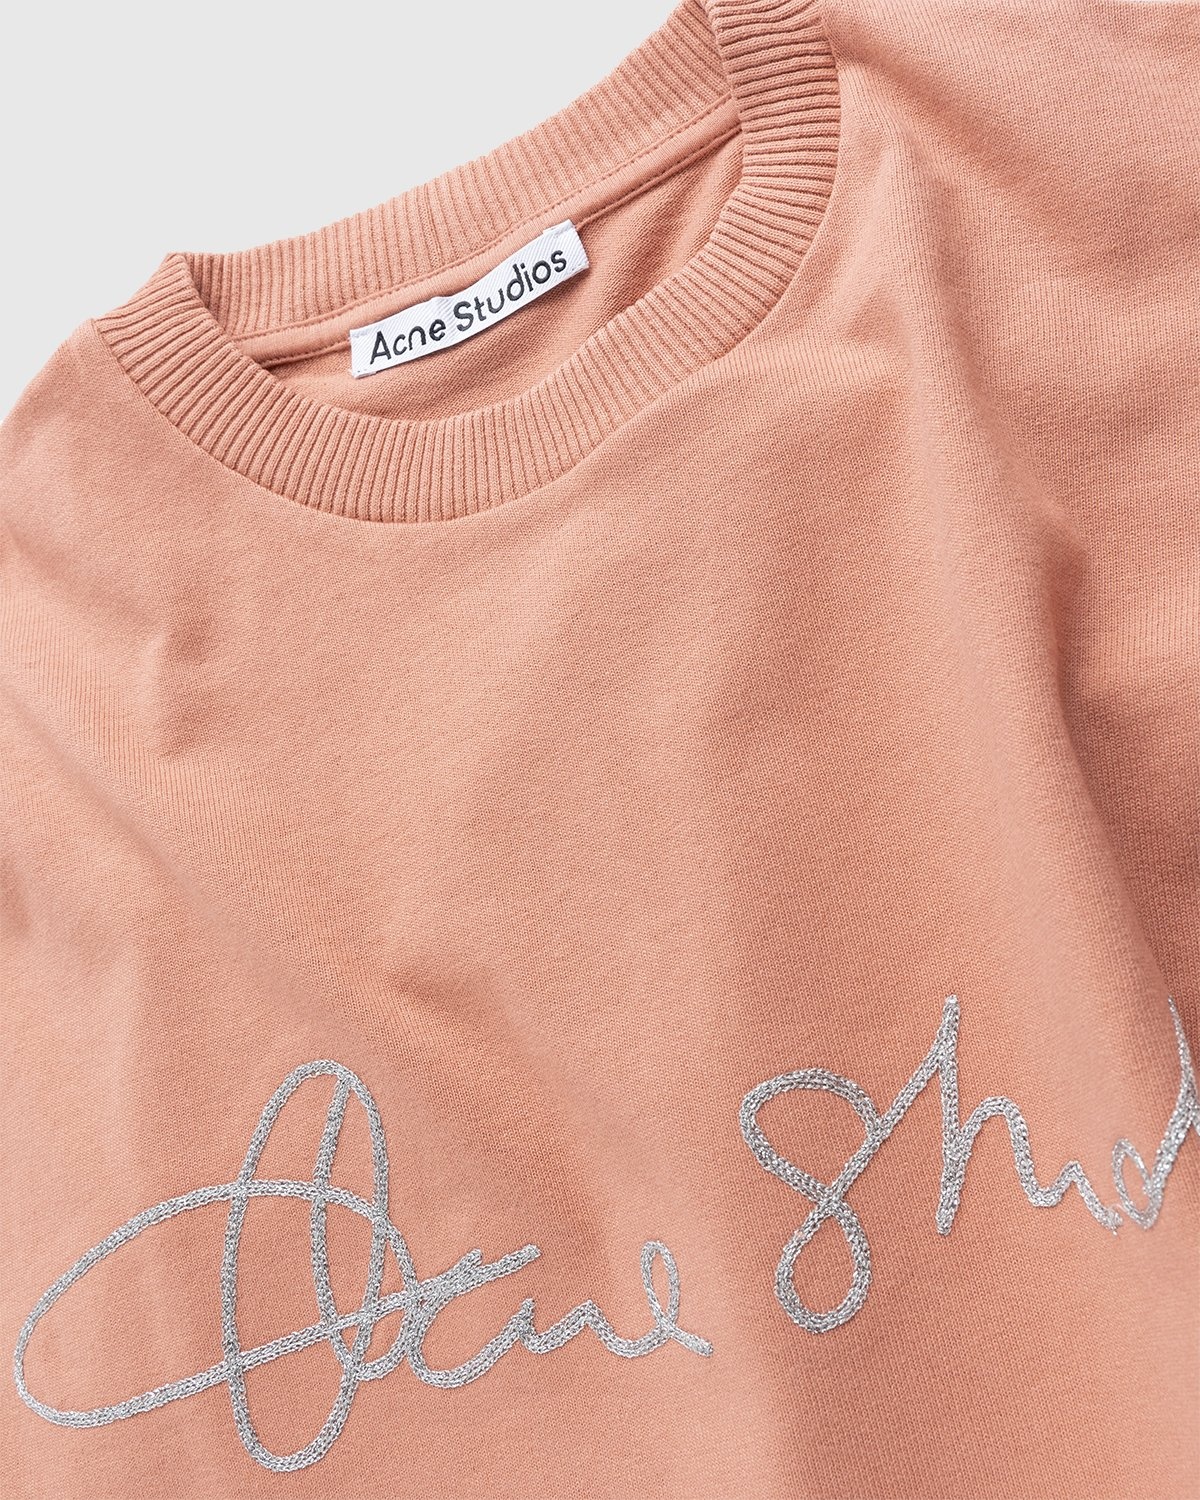 Acne Studios – Cotton Logo T-Shirt Old Pink - Tops - Pink - Image 3